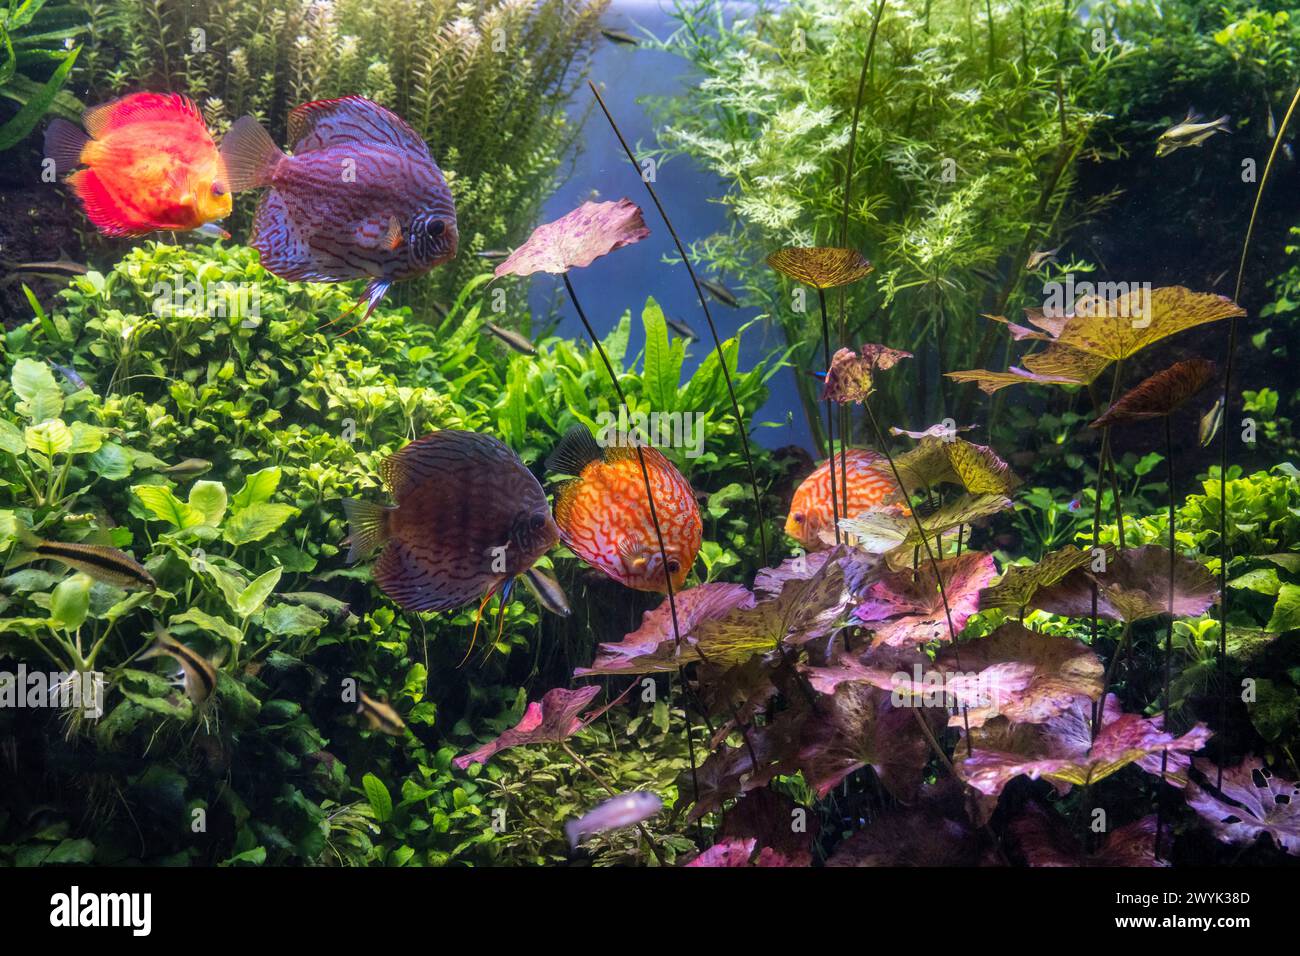 Spain, Catalonia, Barcelona, Port Vell, the aquarium, discus fish (Symphysodon discus) Stock Photo